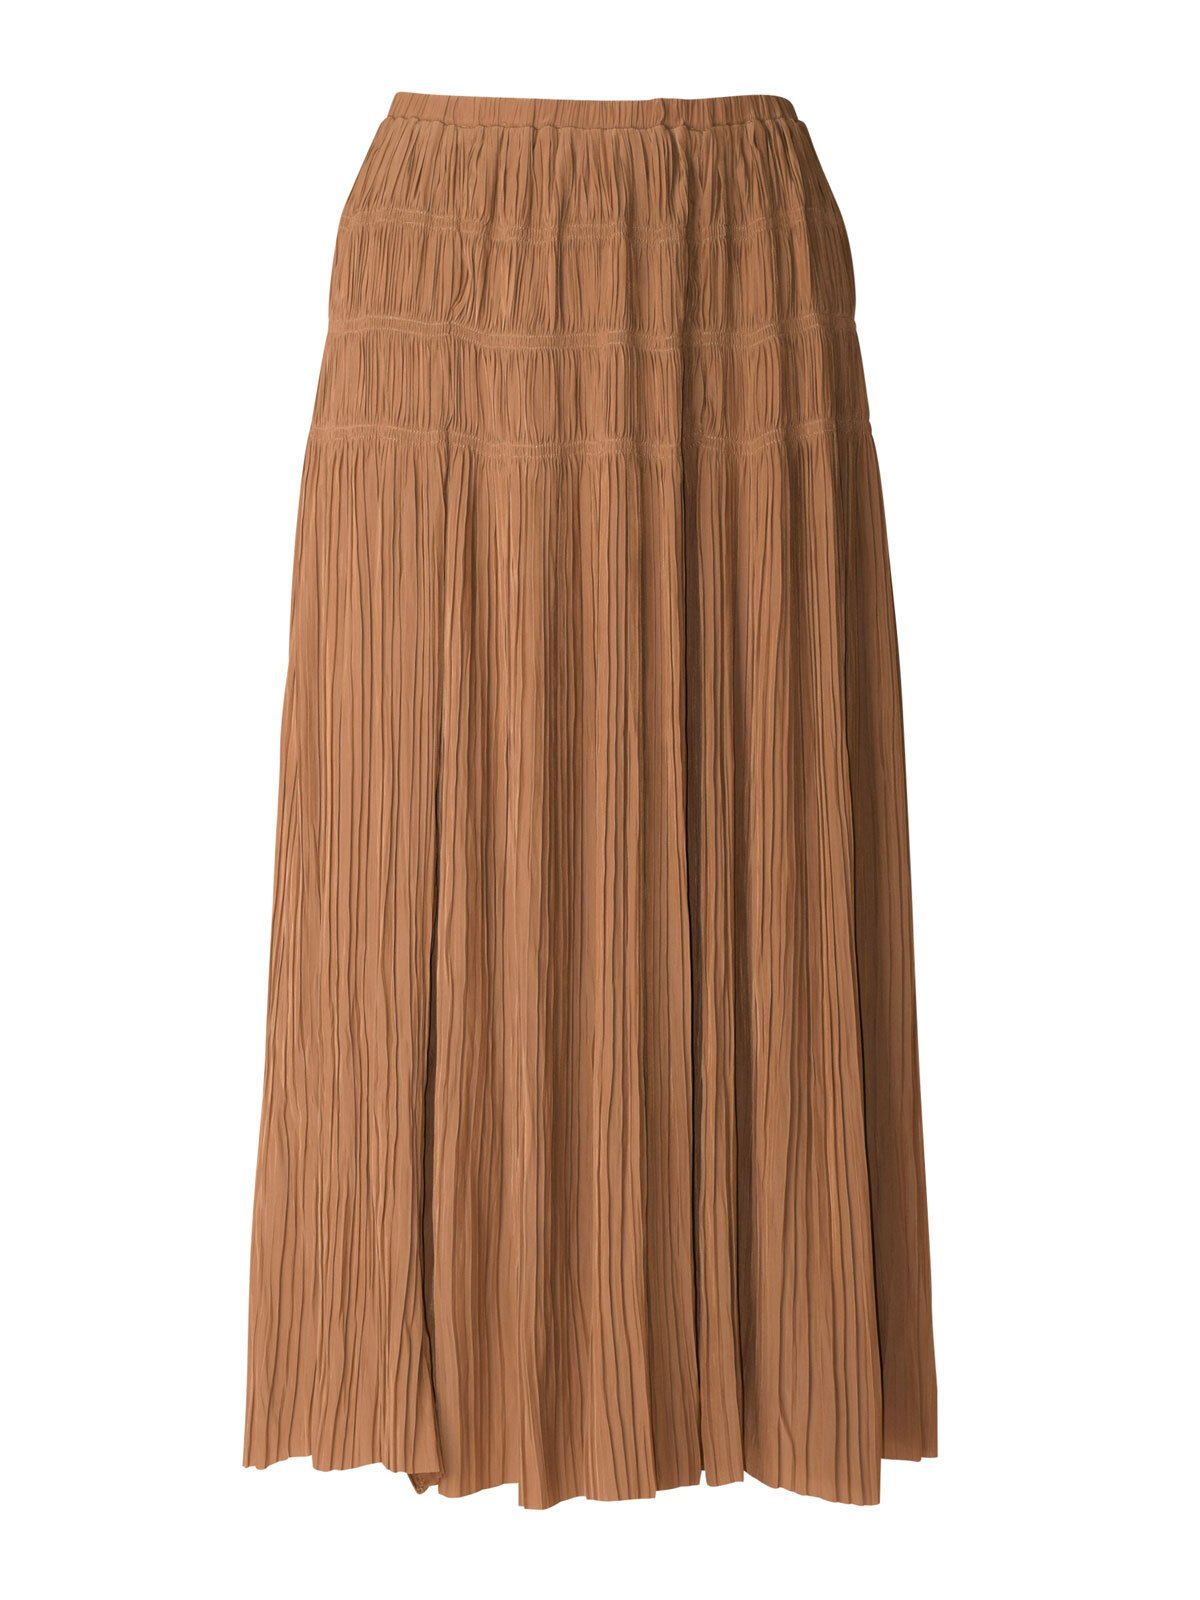 SILLS Canyon Skirt - Brand-Caroline Sills : Diahann Boutique - CAROLINE ...